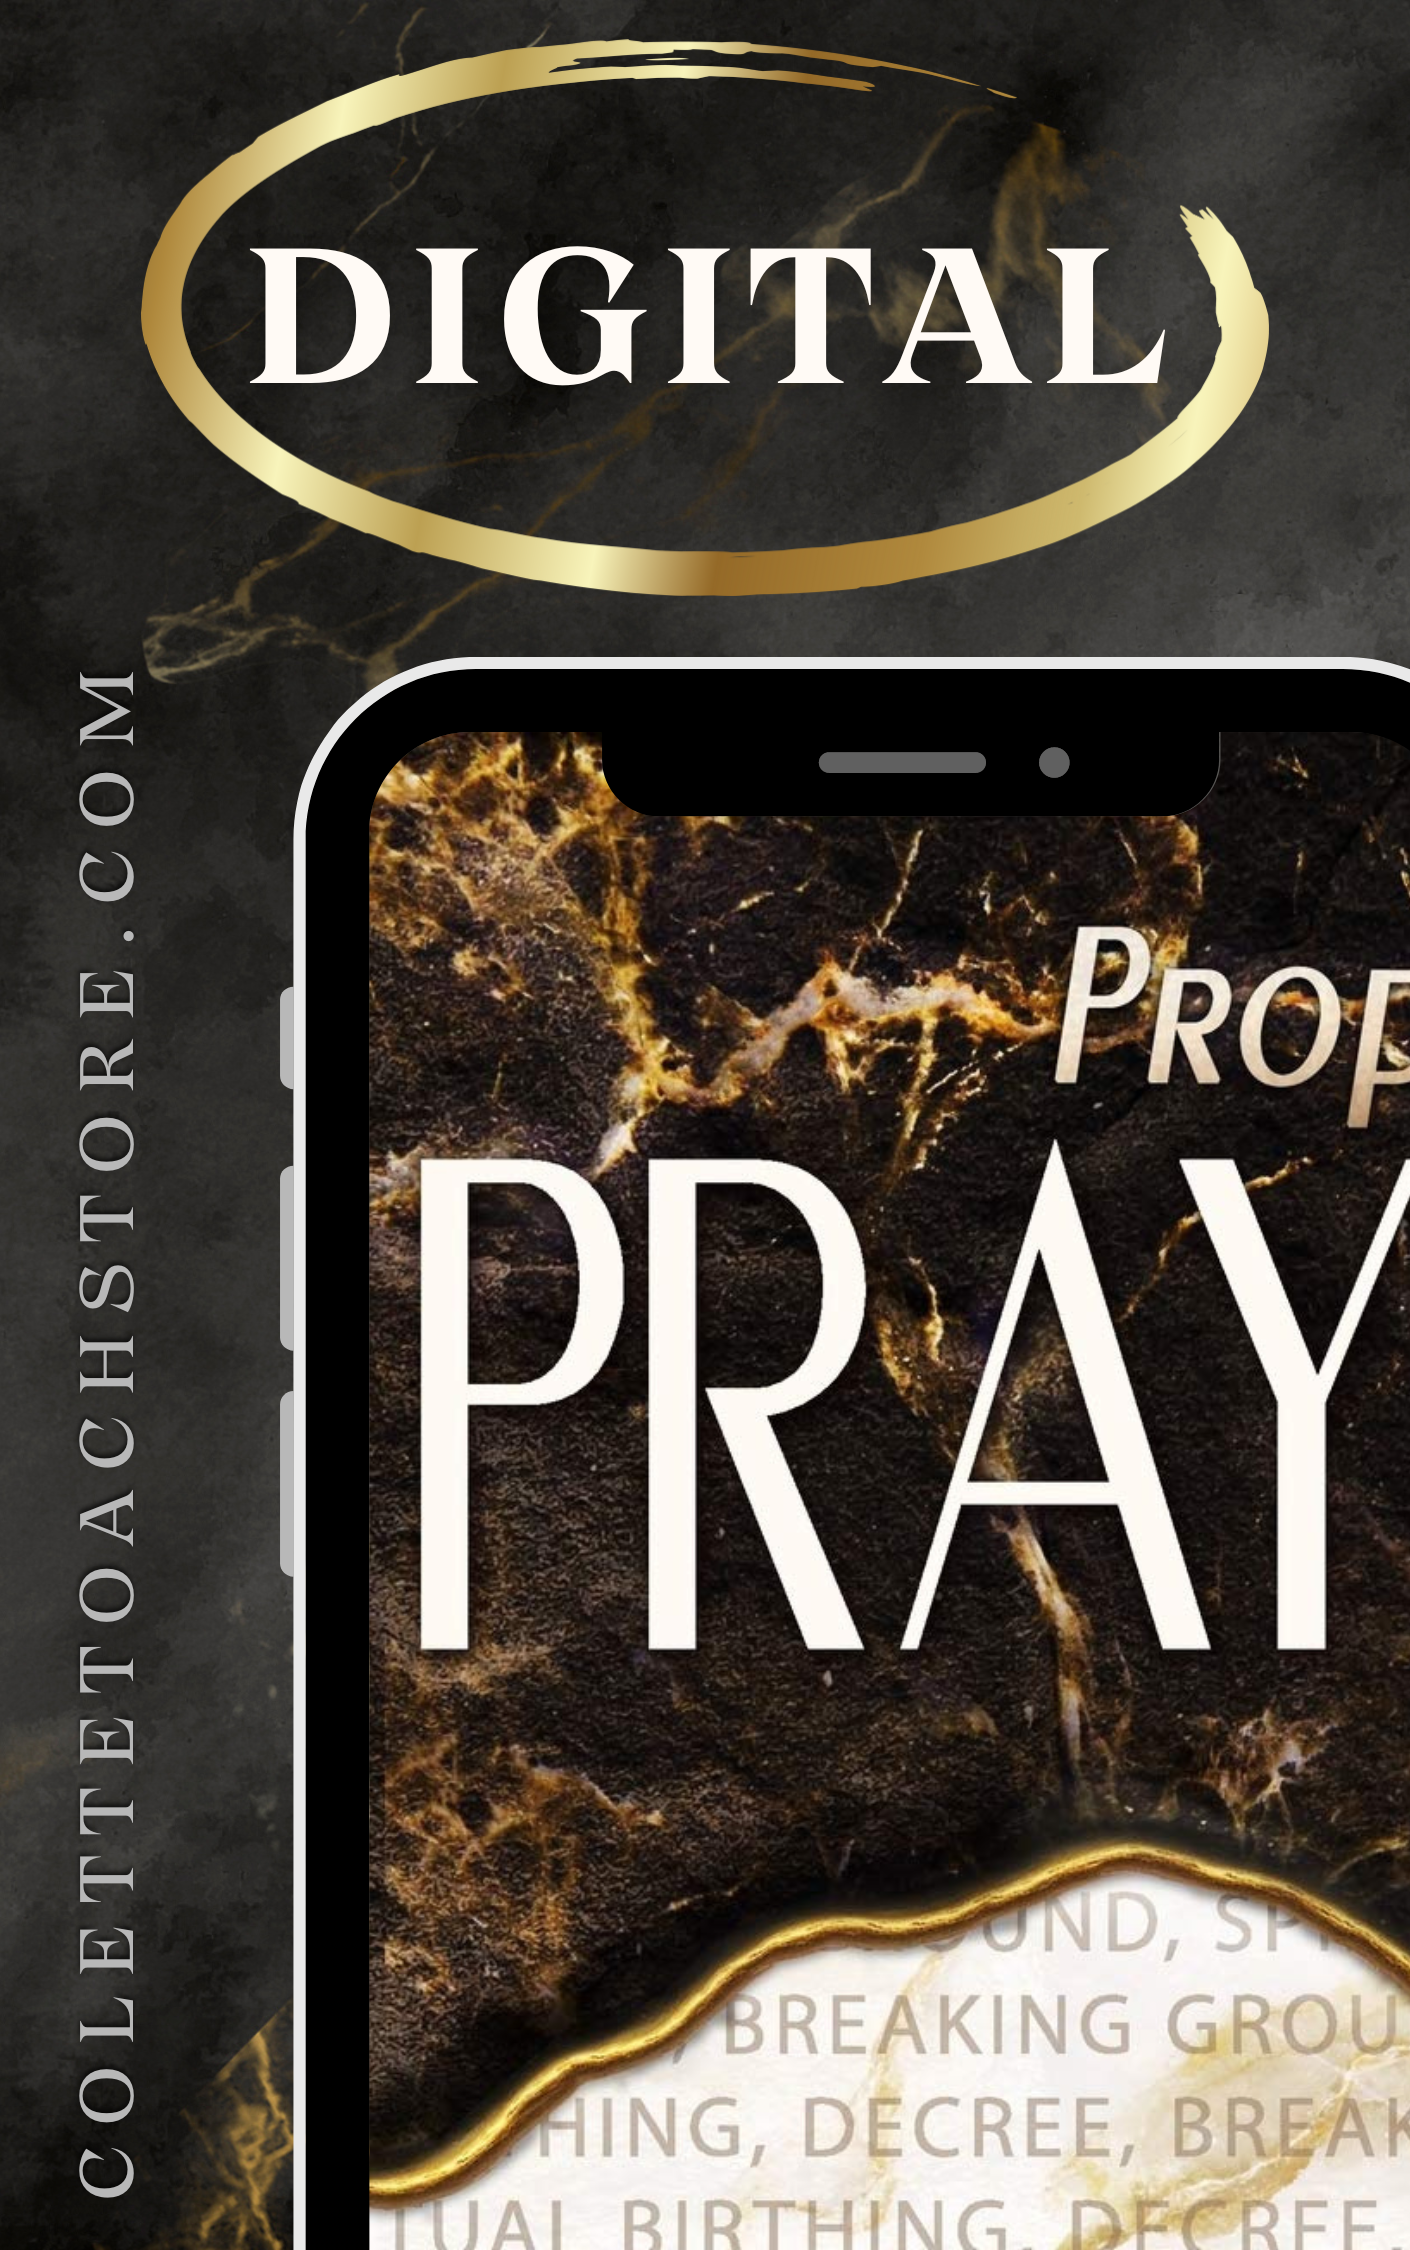 Prophetic Prayer